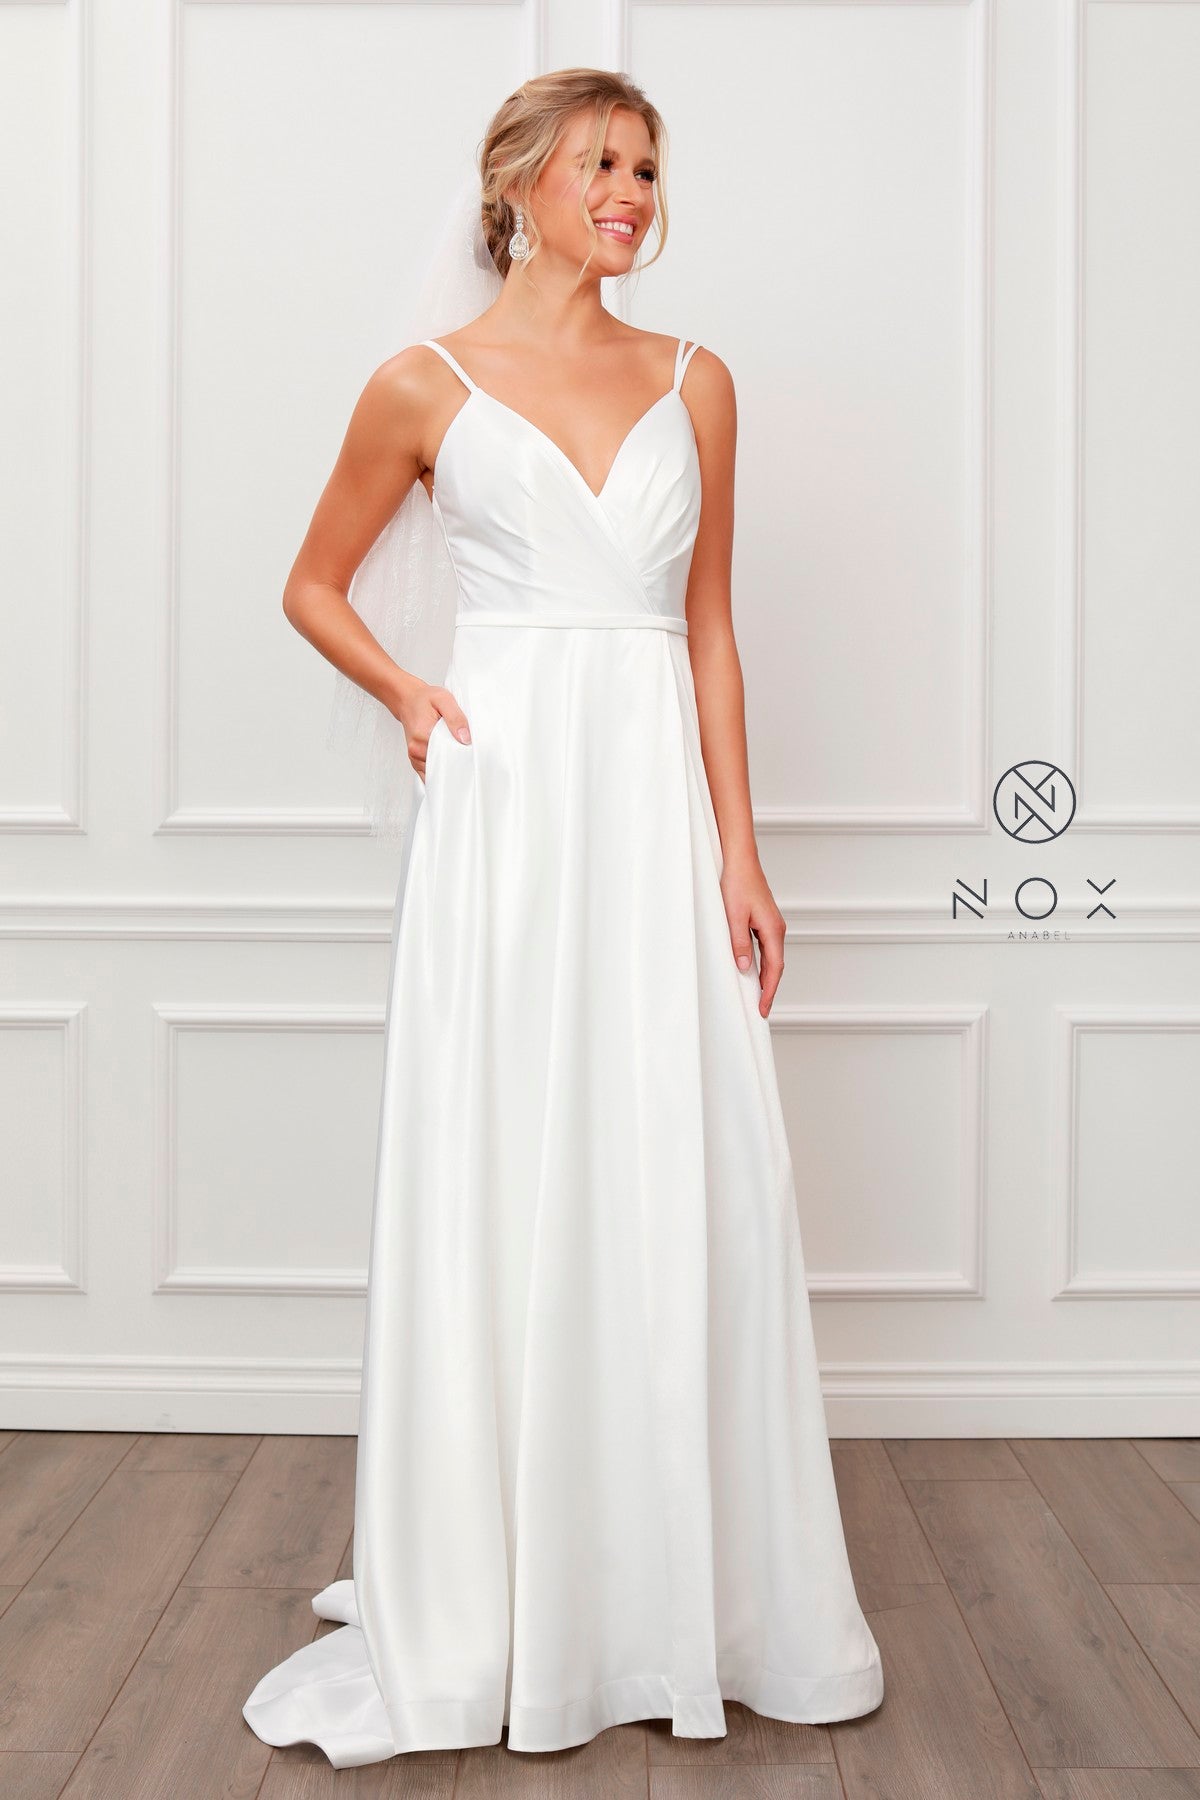 Long Sleeveless Satin Dress By Nox Anabel -E484